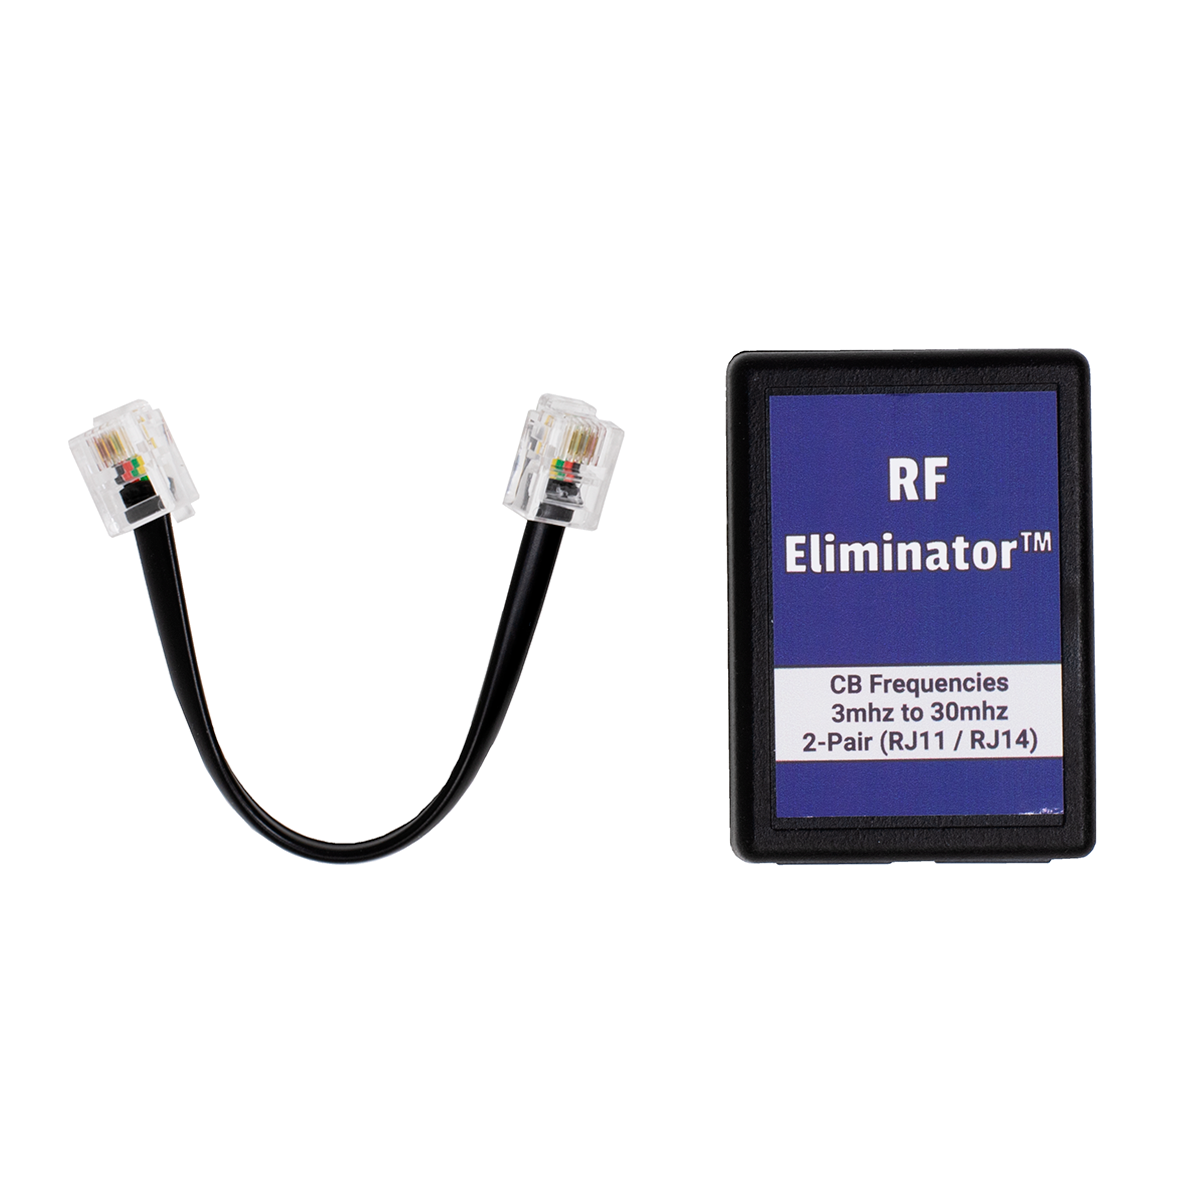 RF Eliminator - 2 Line - CB (Top View)